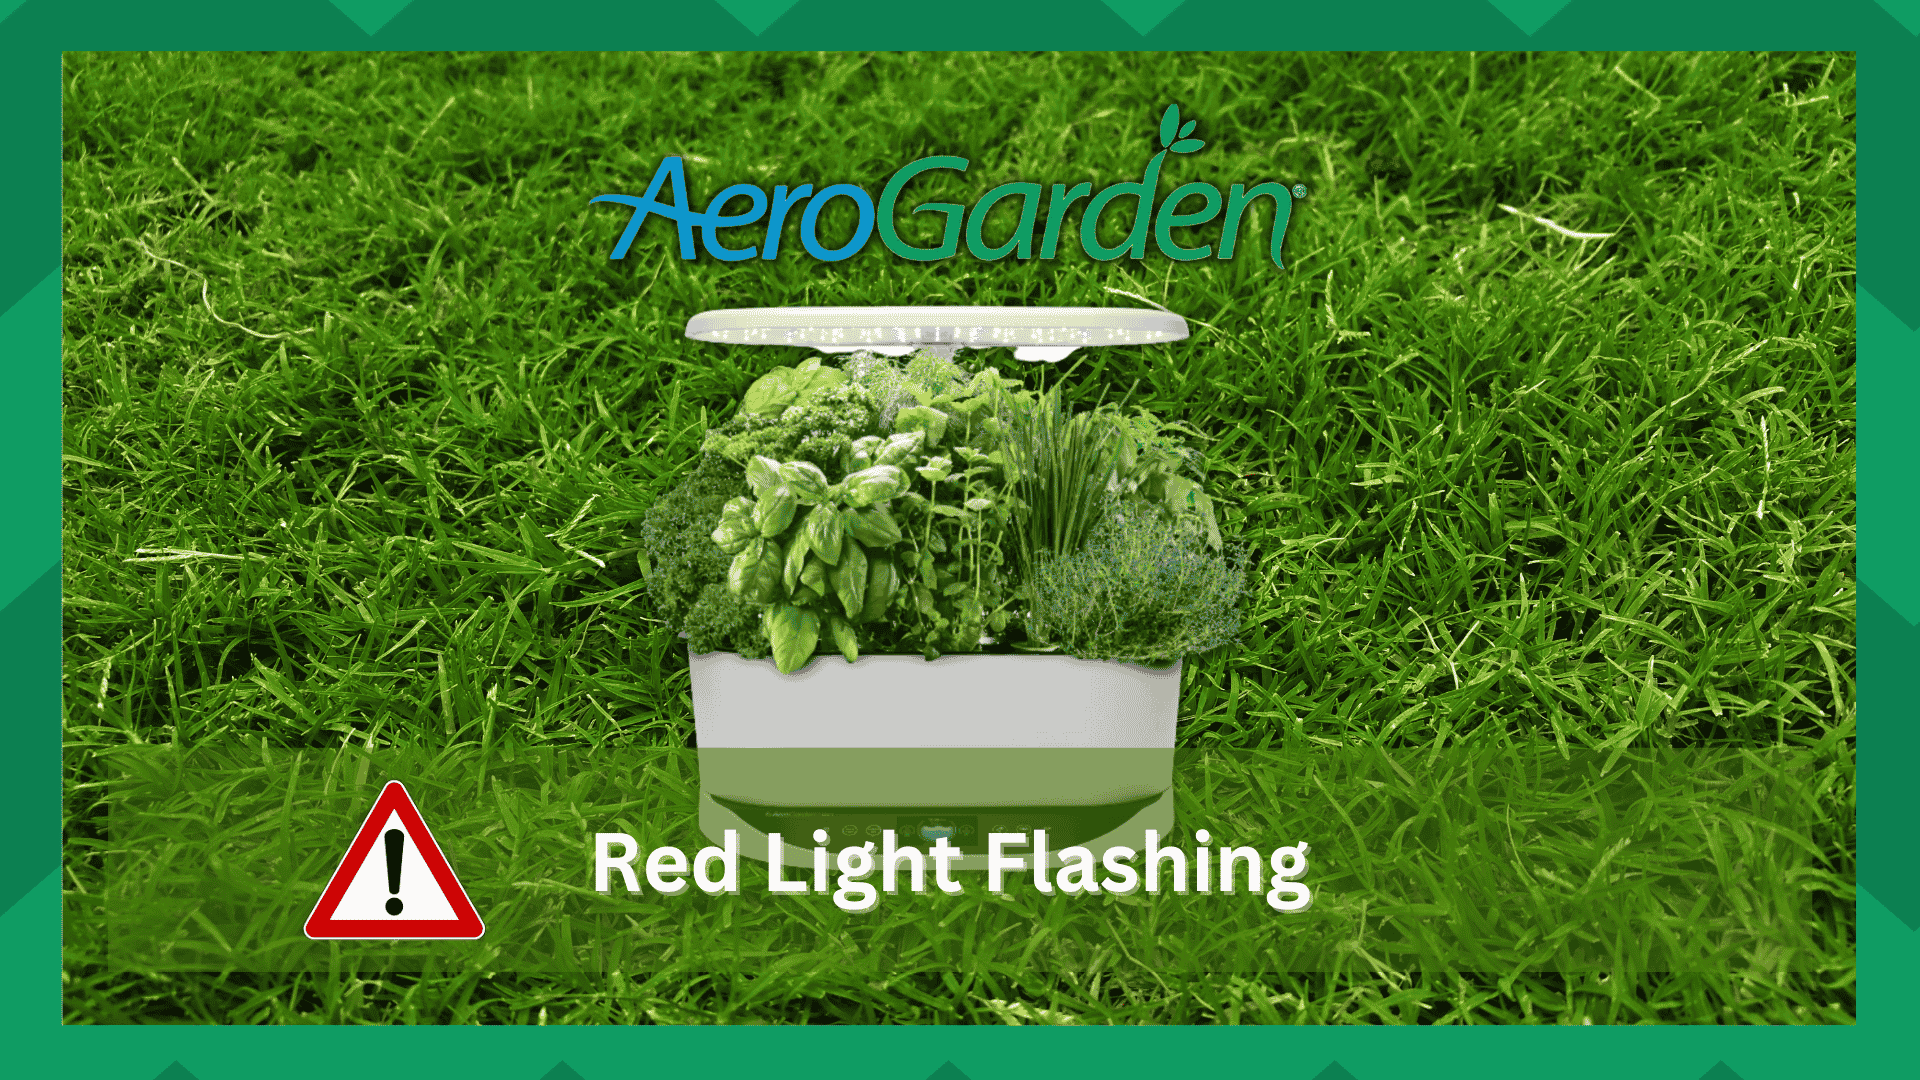 aerogarden red light flashing